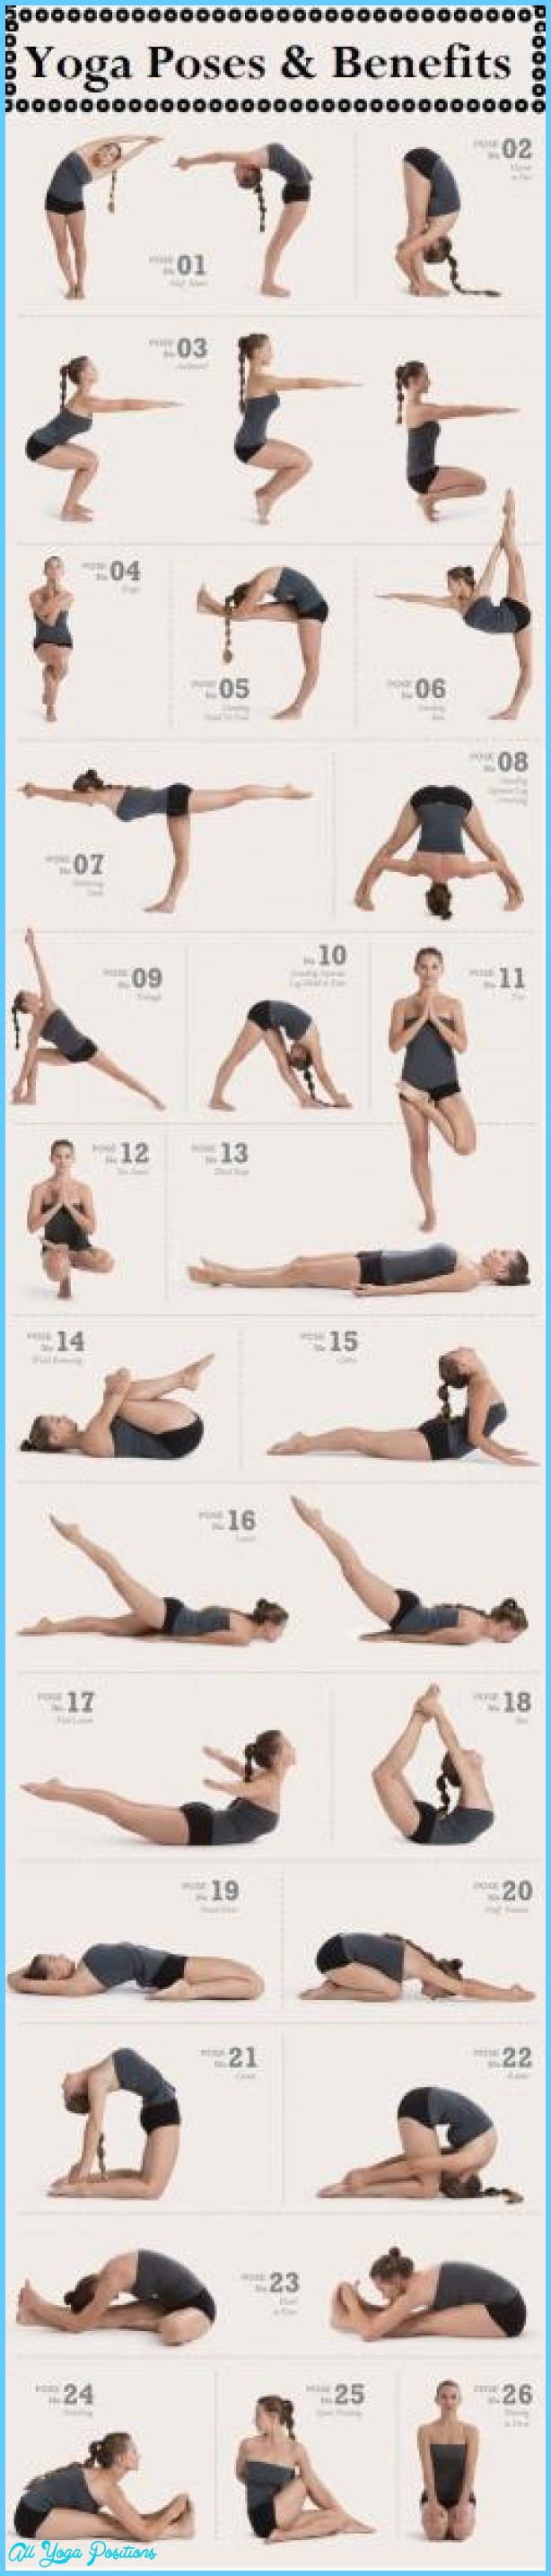 Yoga poses kidneys - AllYogaPositions.com